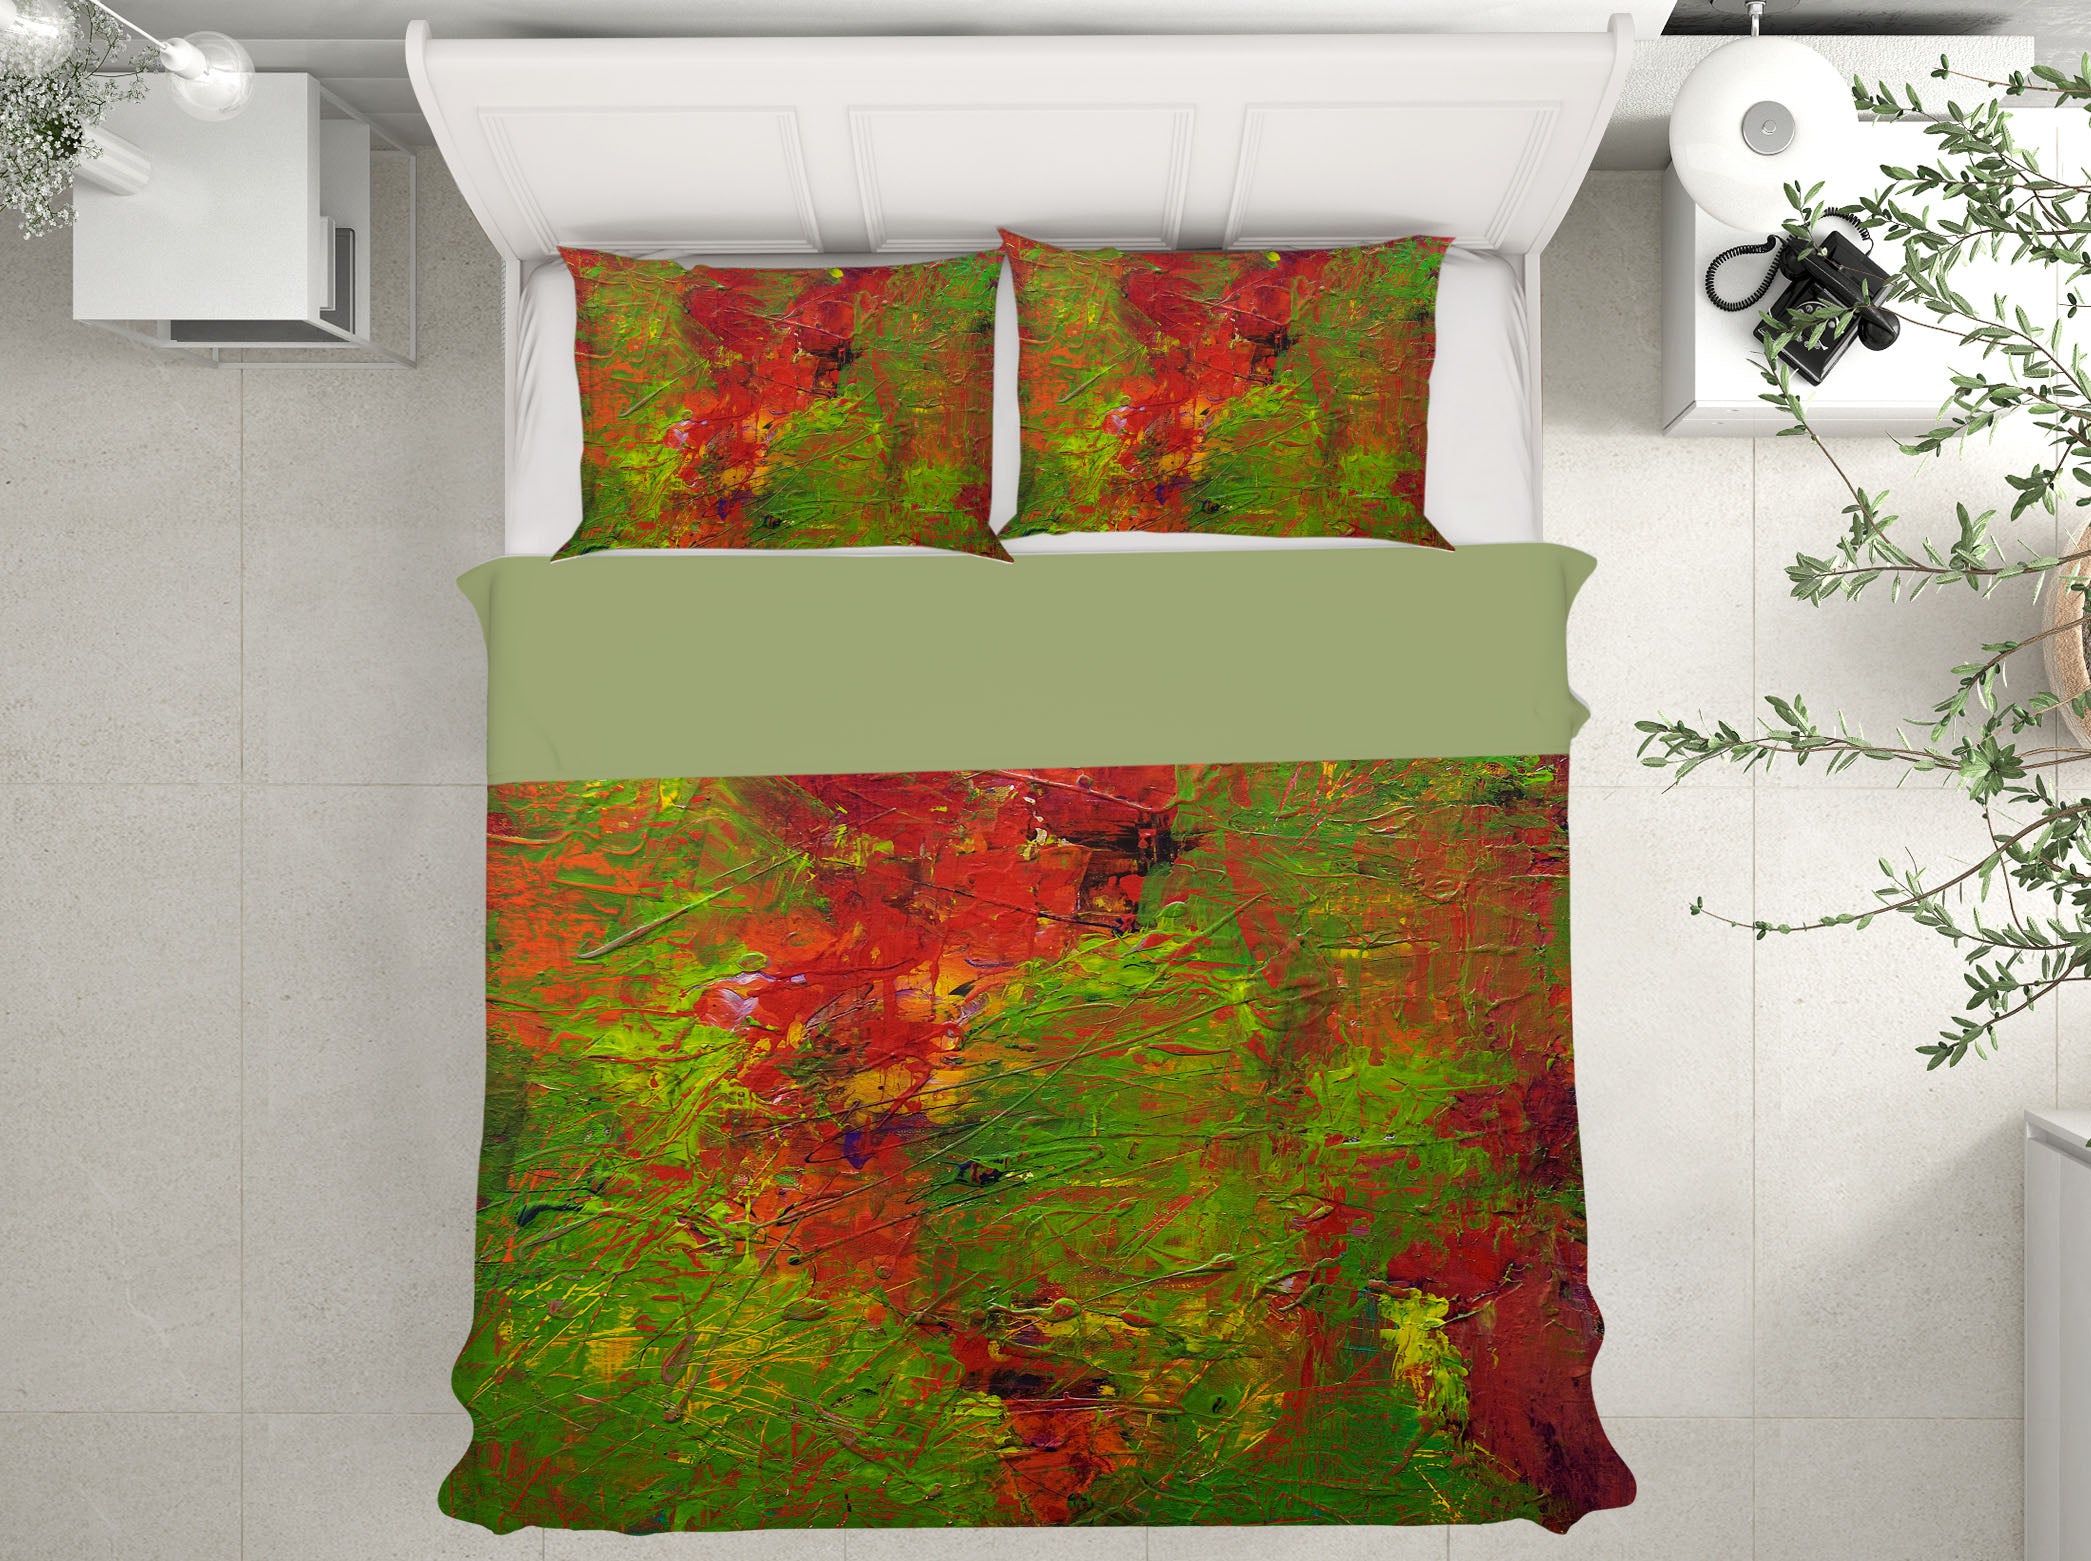 3D Lotus Pond 119 Allan P. Friedlander Bedding Bed Pillowcases Quilt